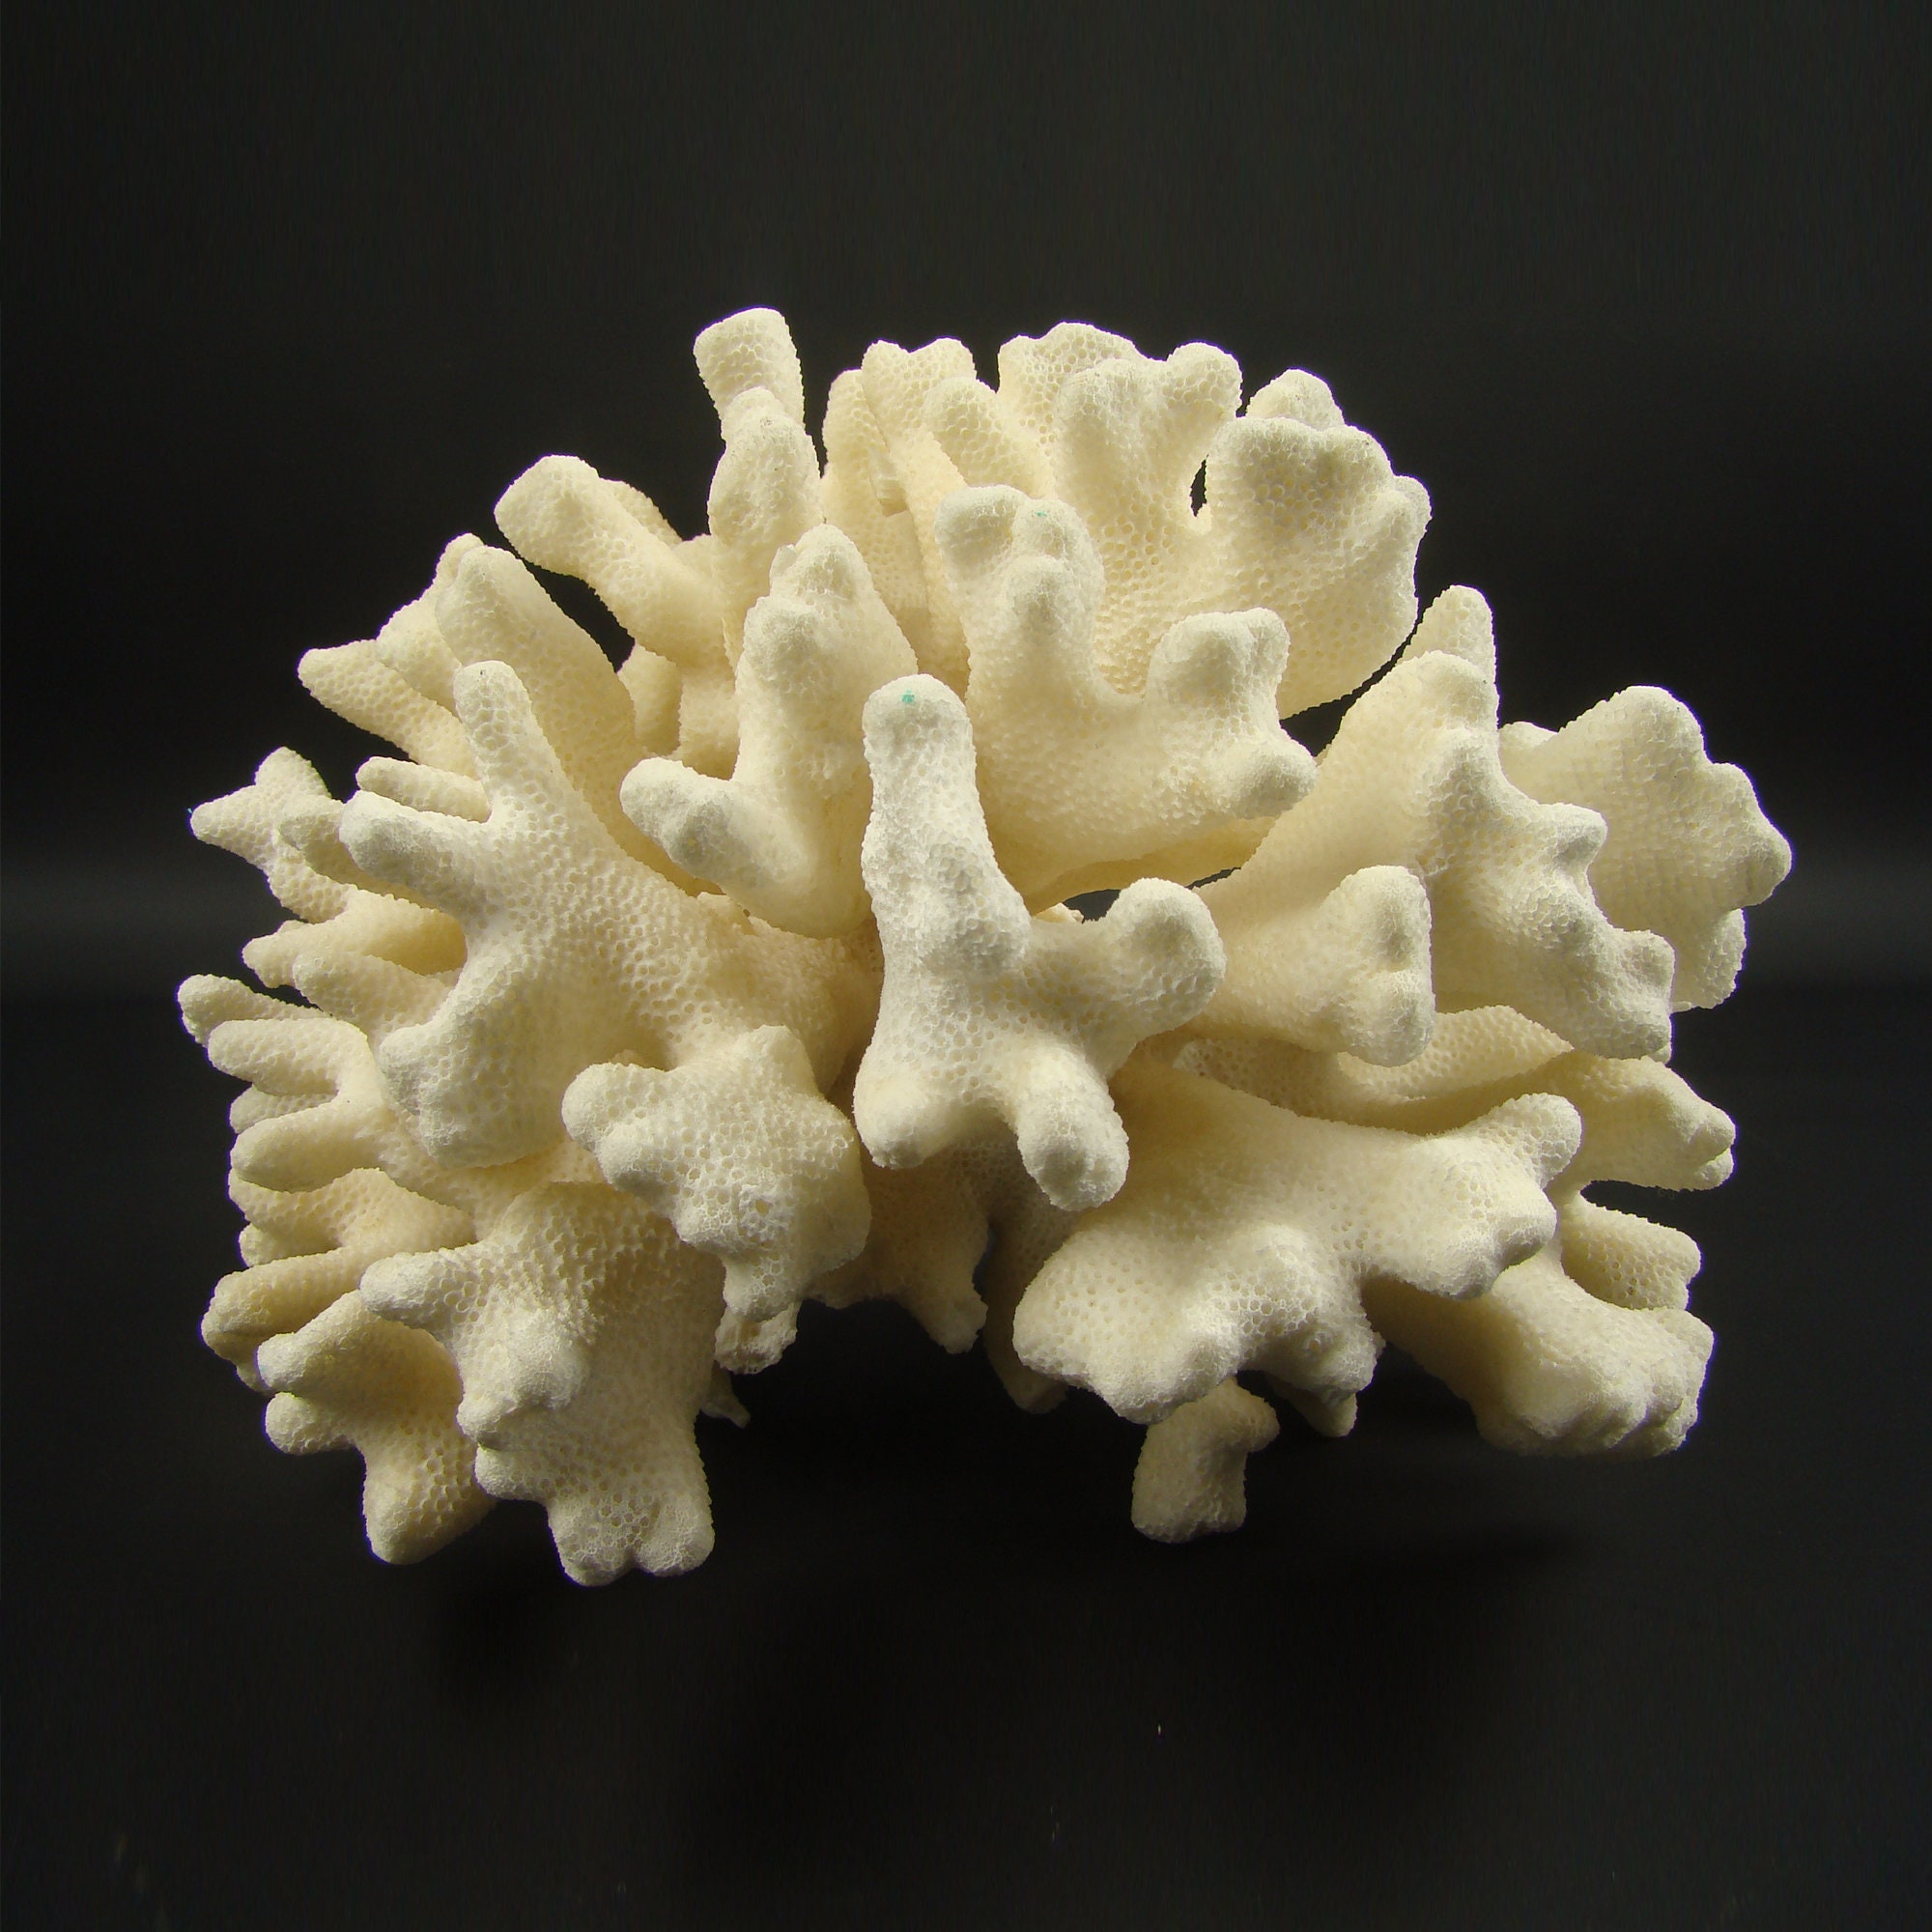 Coral Reef Specimen 